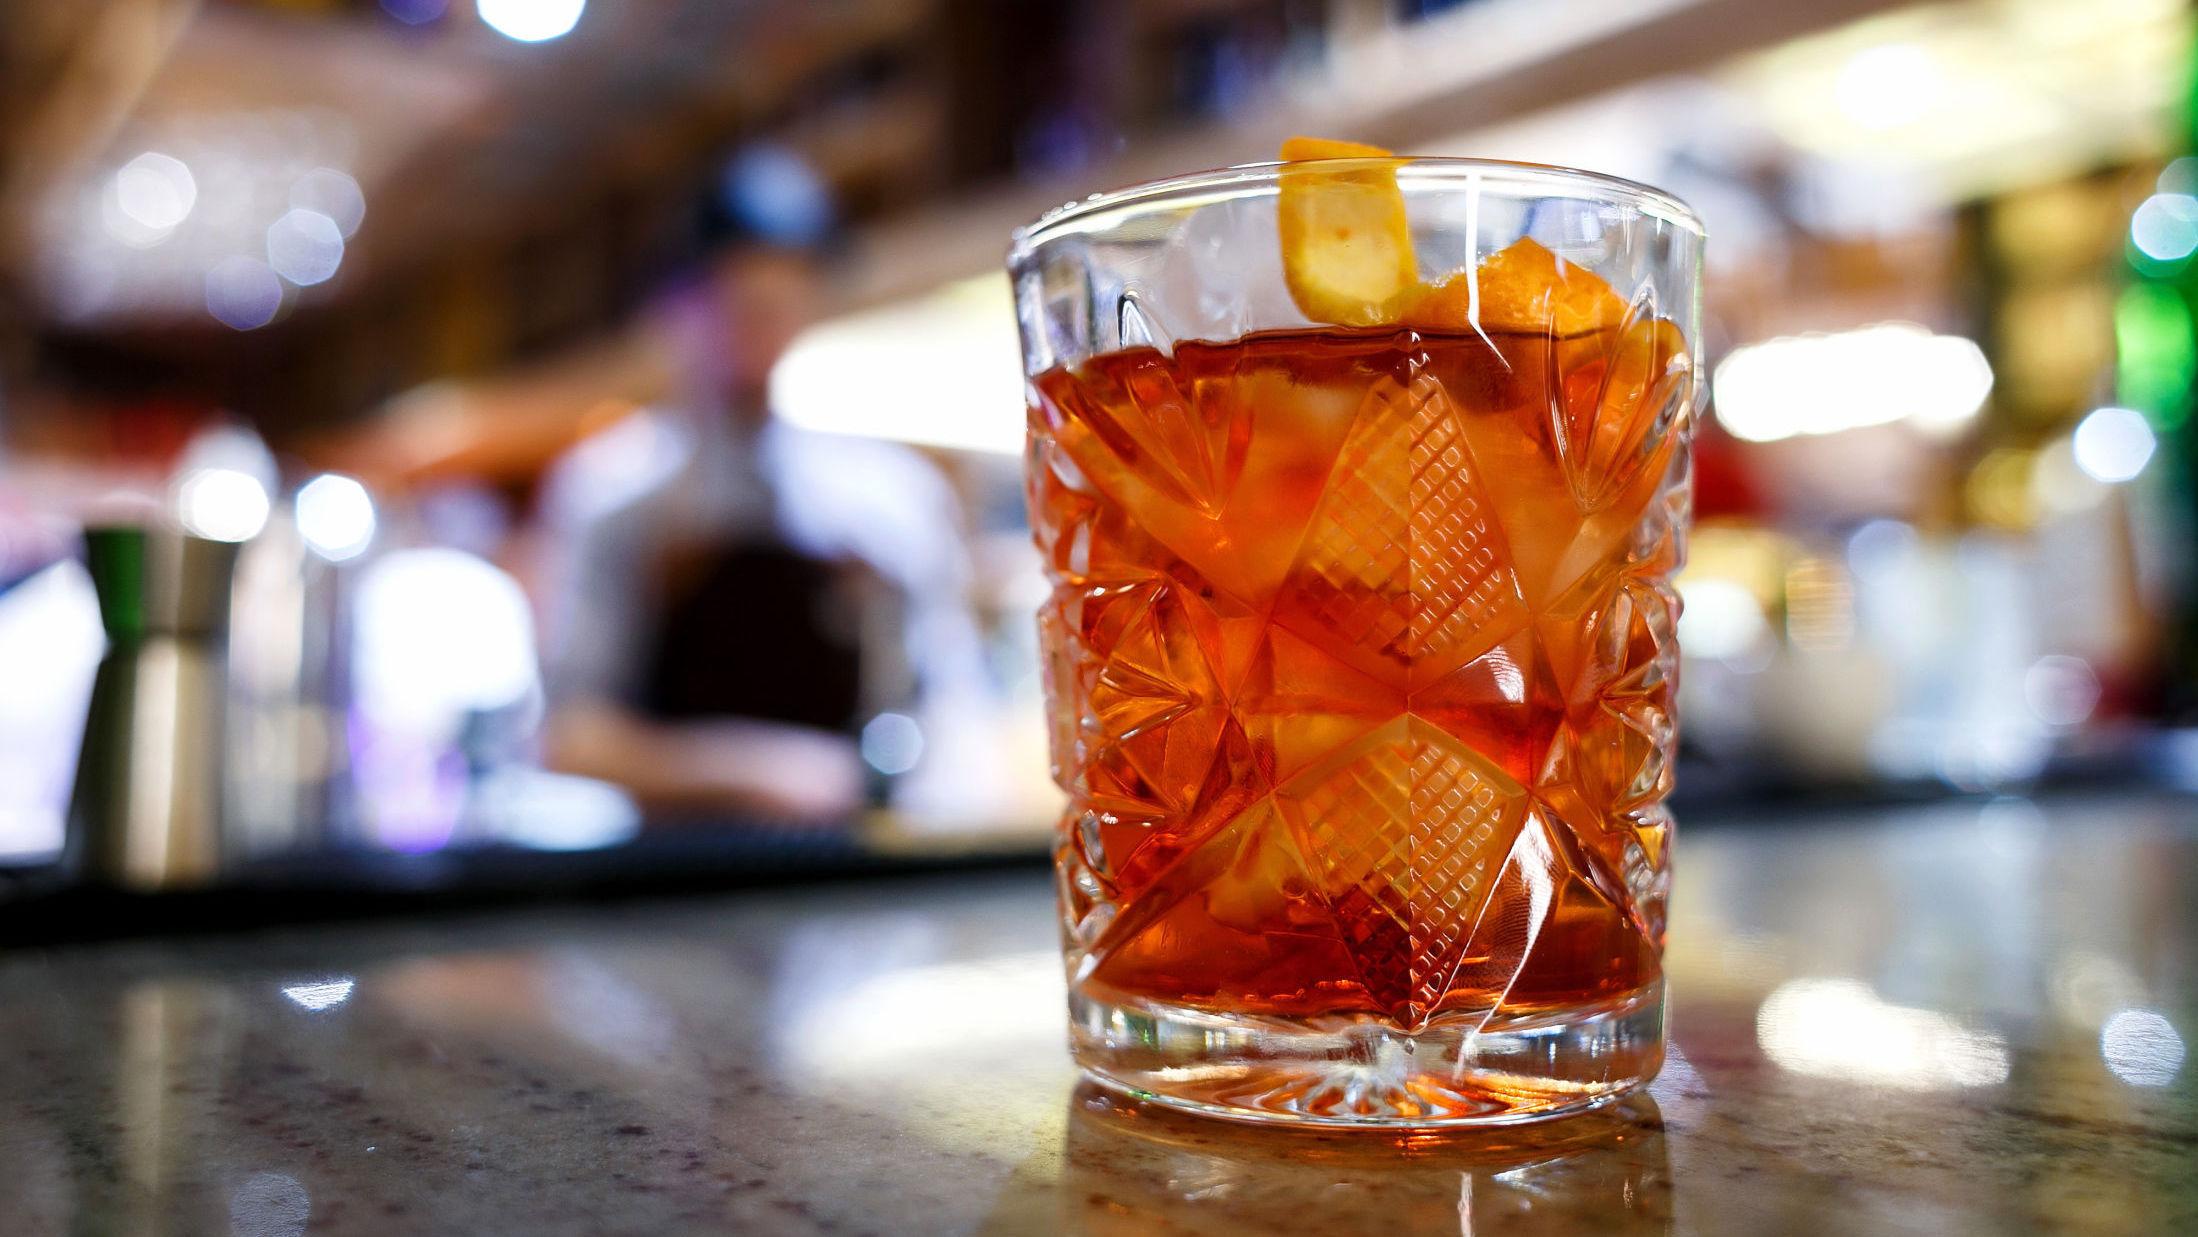 KLASSIKERE: Det er mange klassikere på mest solgte-listen til Drinks International, deriblant Negroni. Foto: Shutterstock